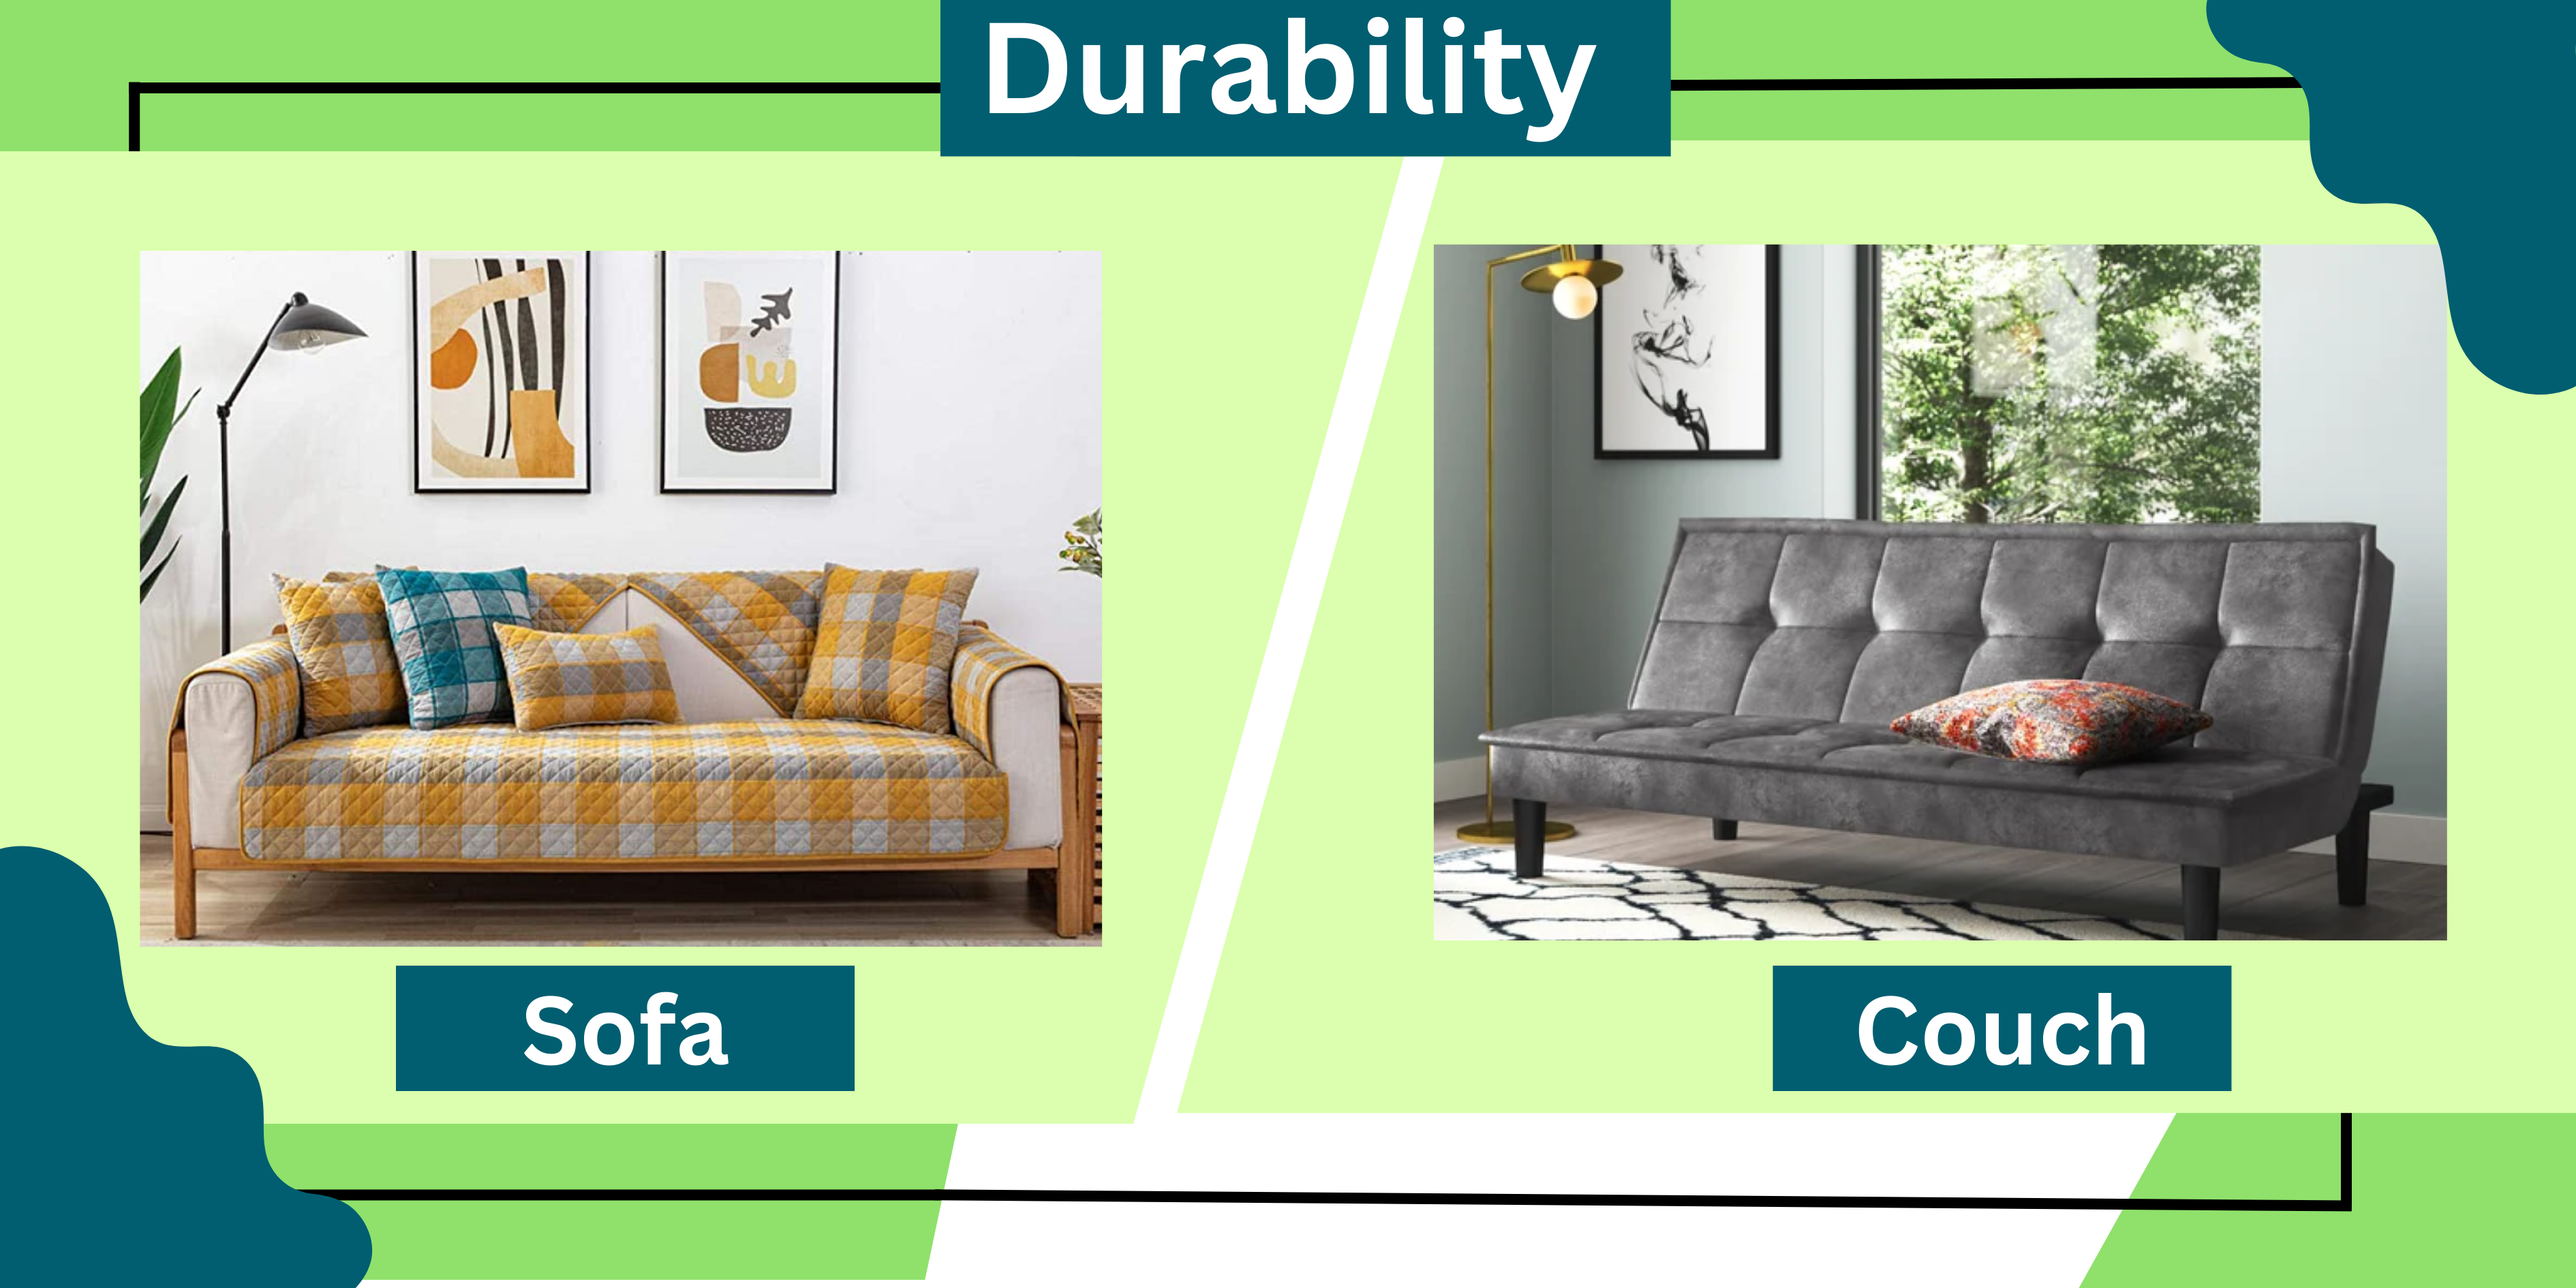 Sofa vs Couch Durability